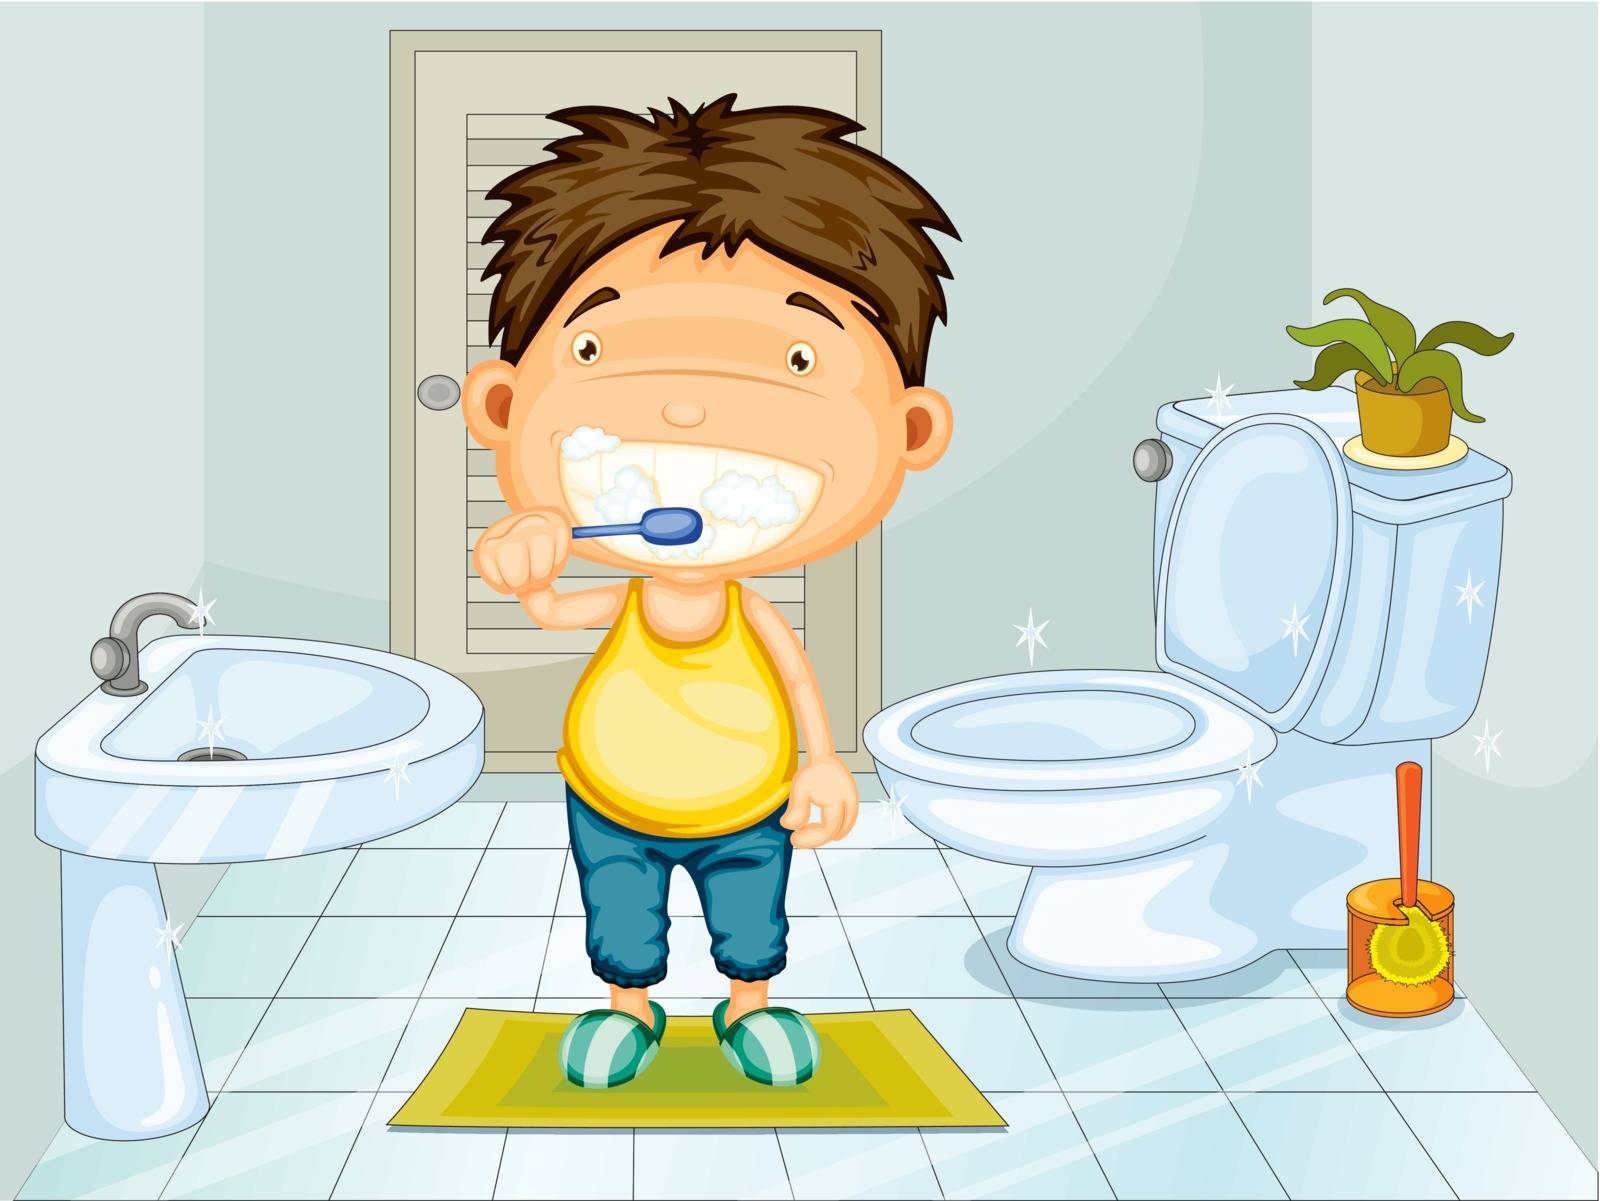 Boy brushing teeth in bathroom